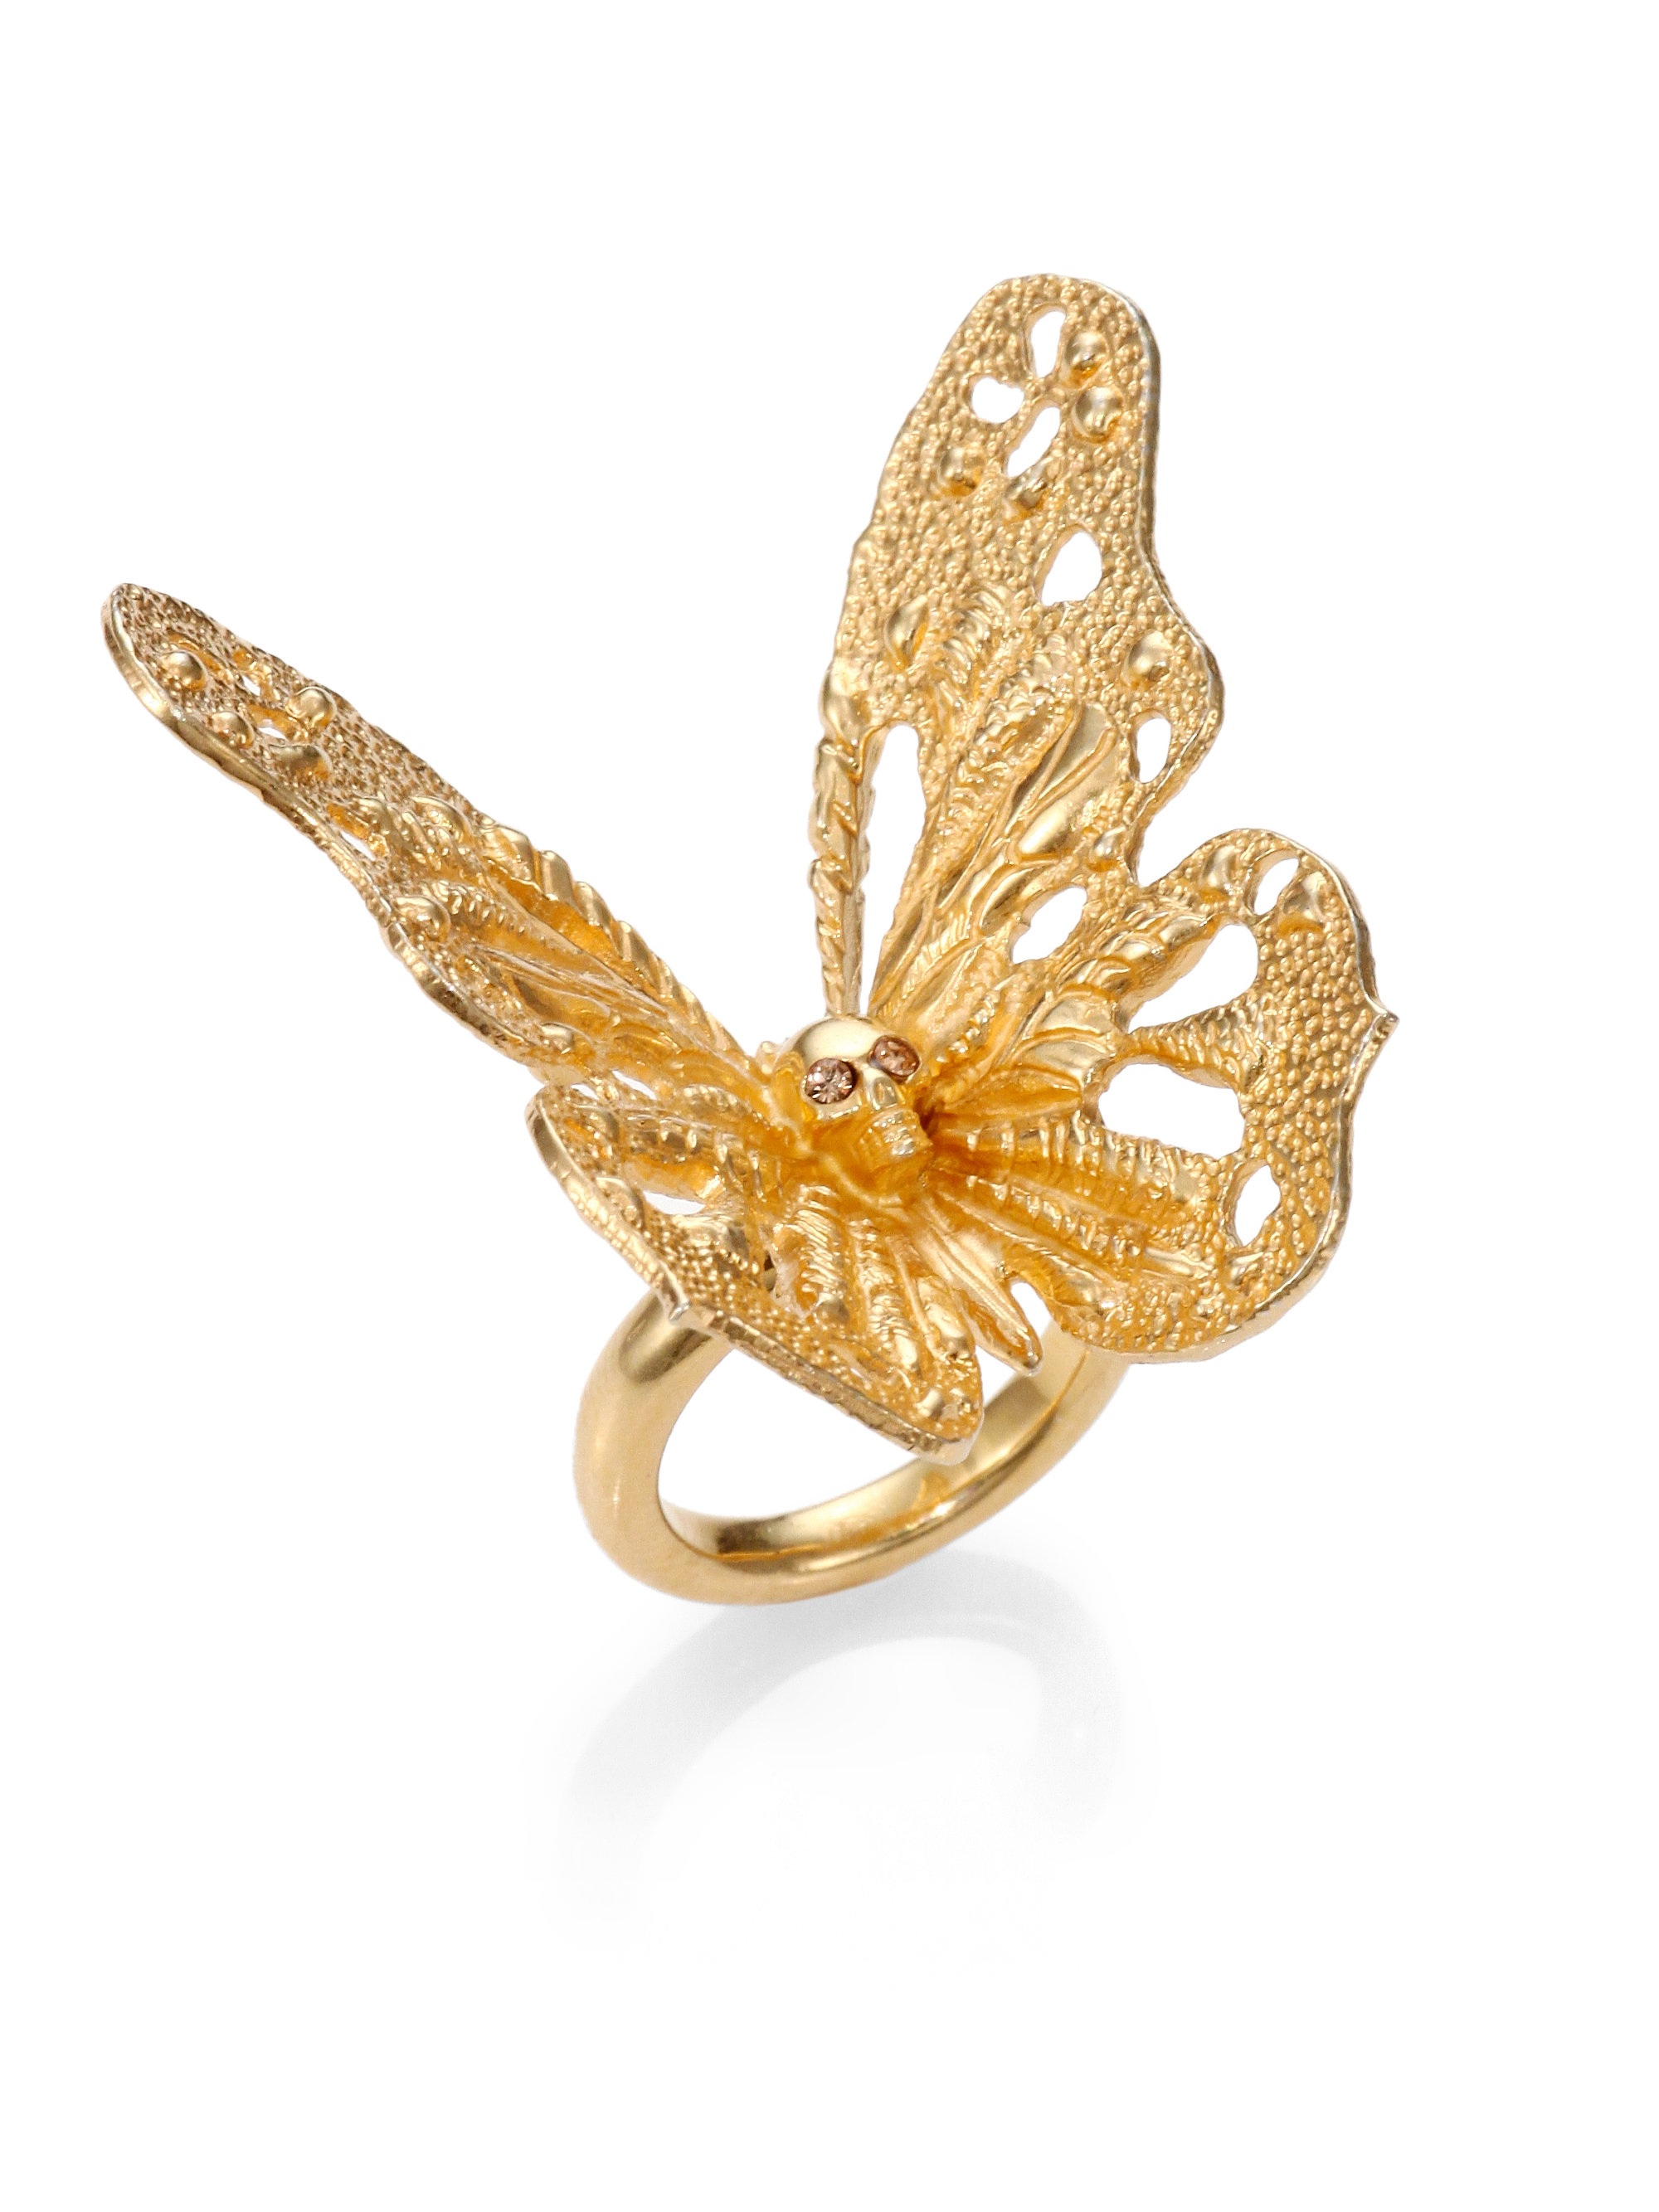 Alexander McQueen Butterfly Ring in 